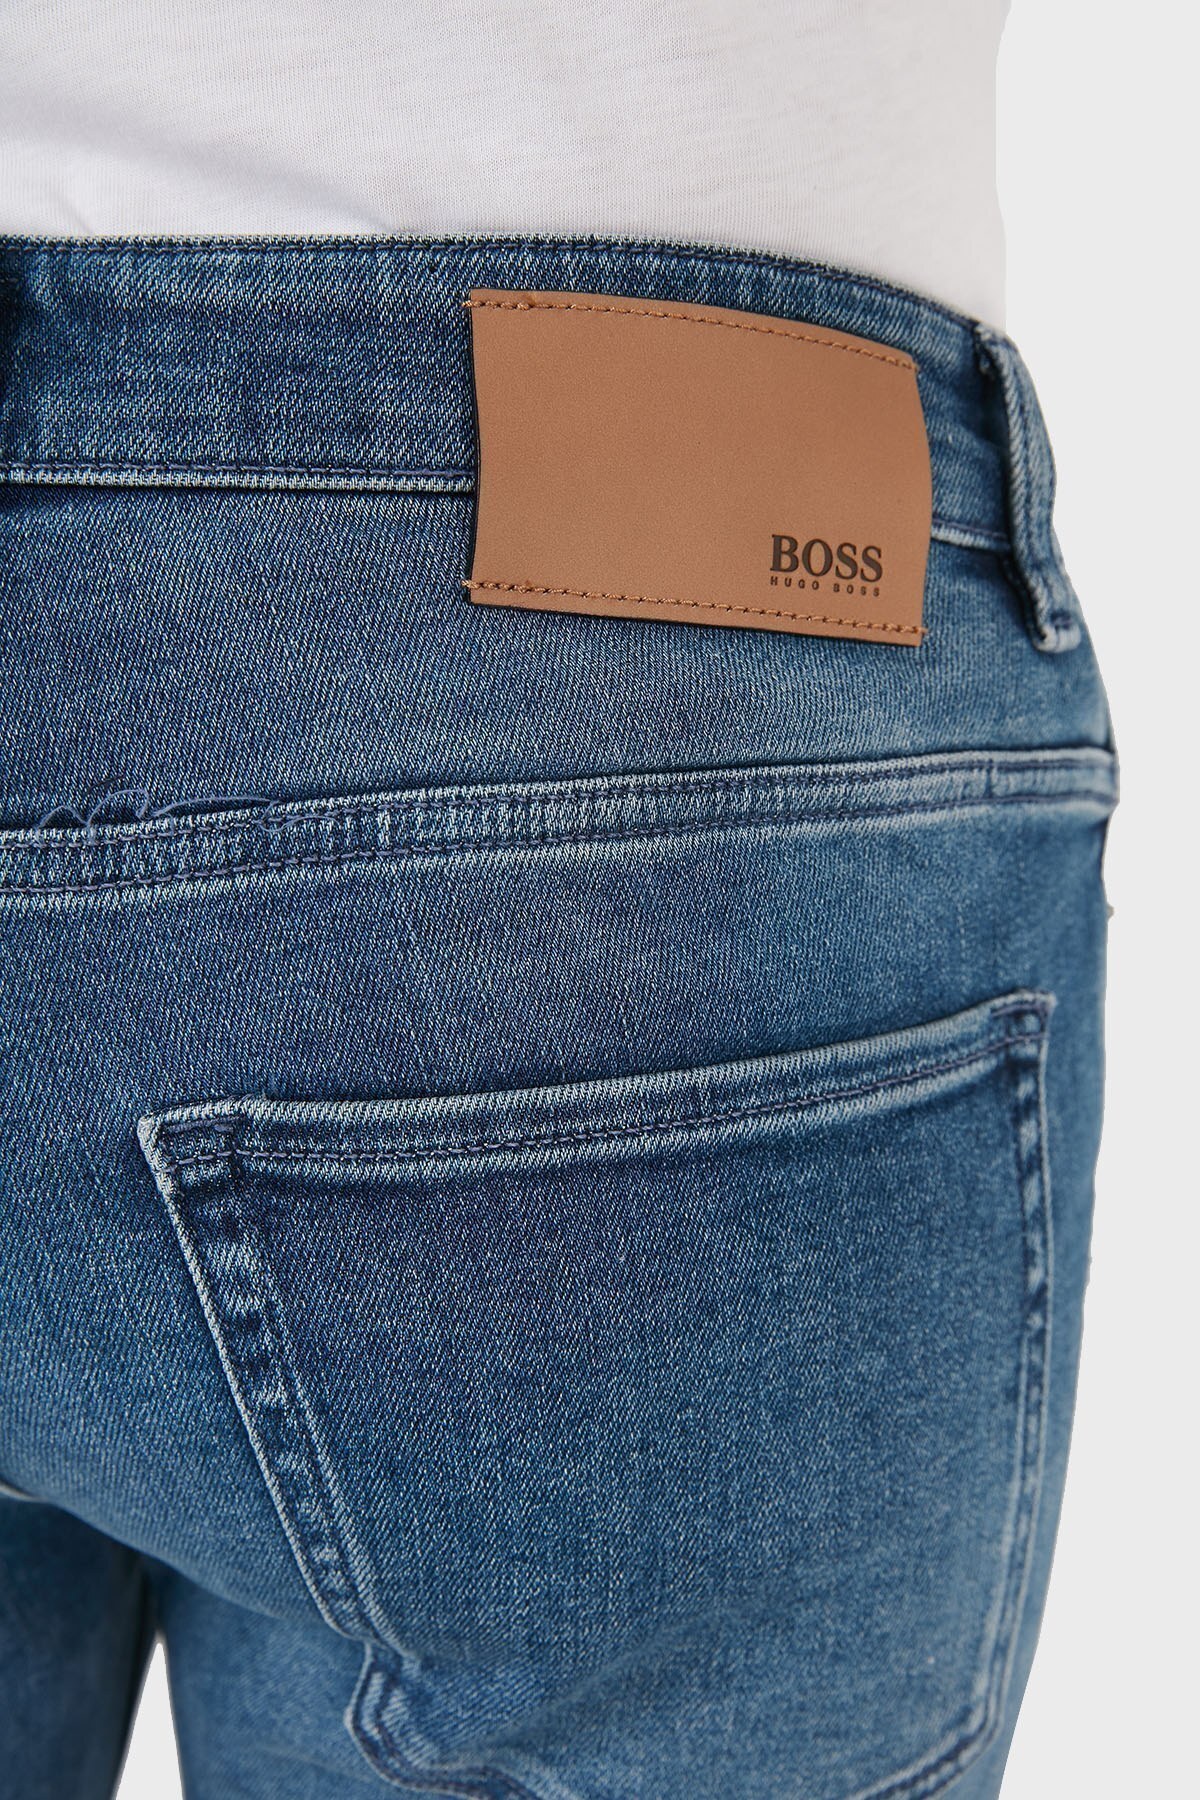 Hugo Boss Slim Fit Dar Paça Pamuklu Jeans Erkek Kot Pantolon 50452904 430 MAVİ